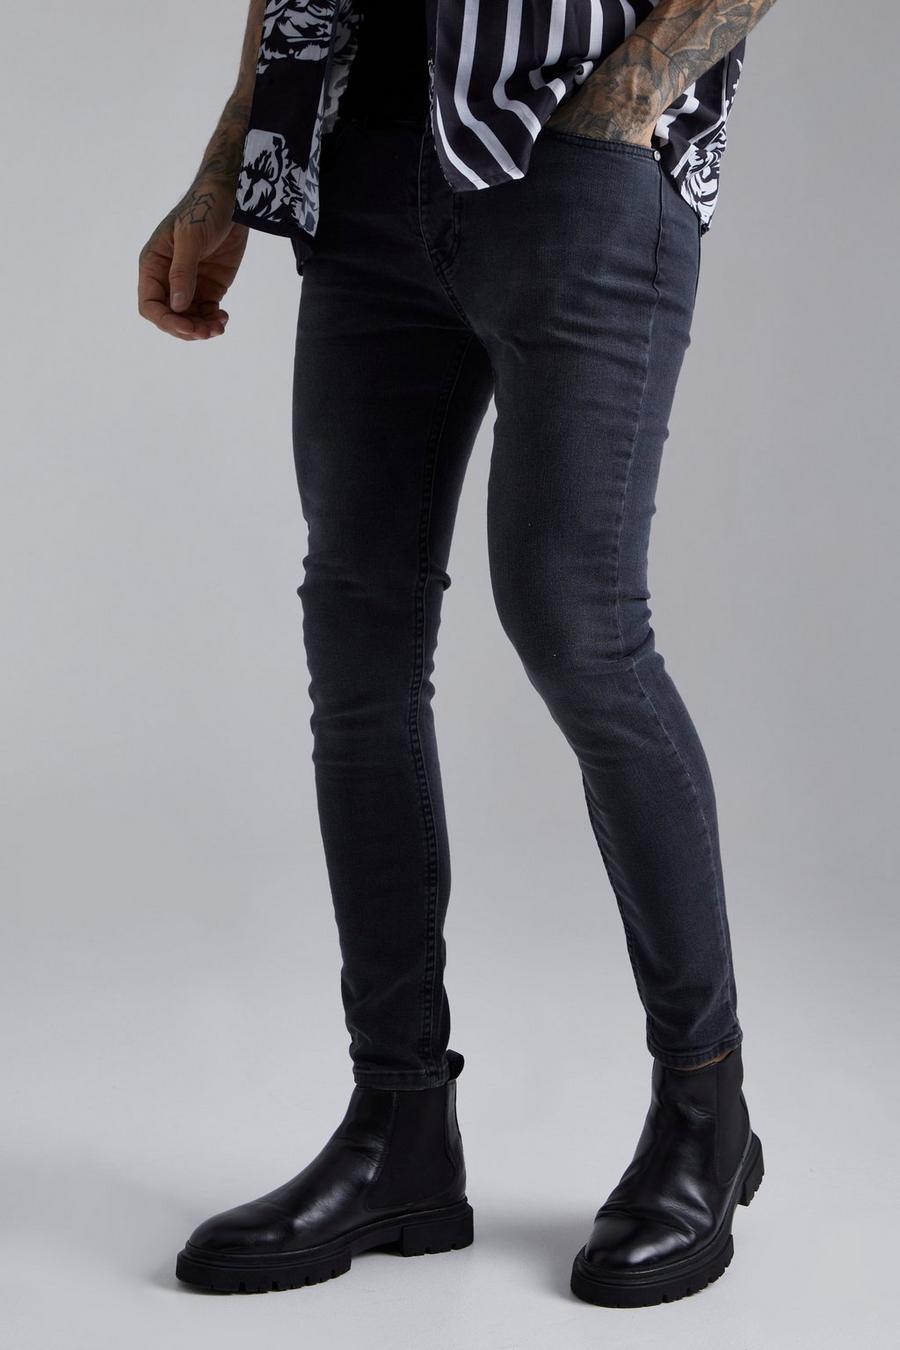 Jeans Skinny Fit con tasche in PU, Black negro